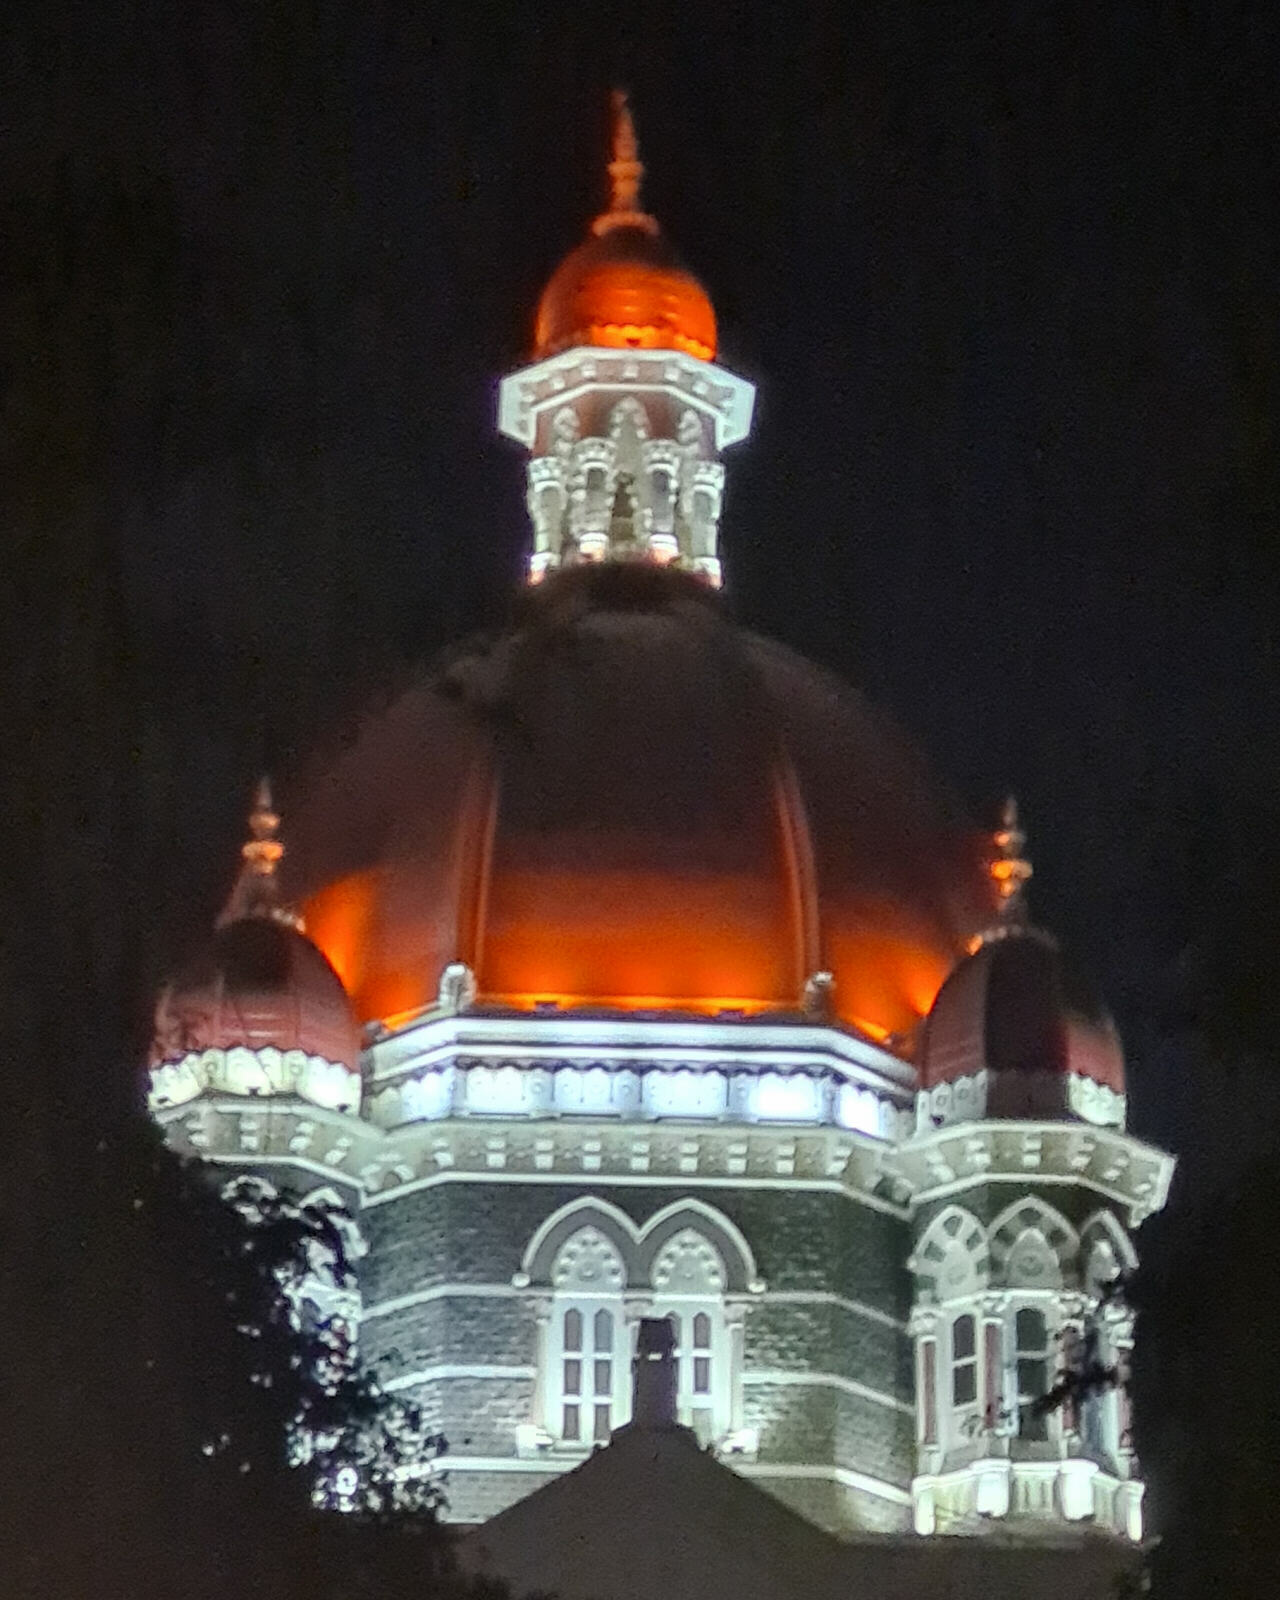 The tower of the Taj hotel, Bombay